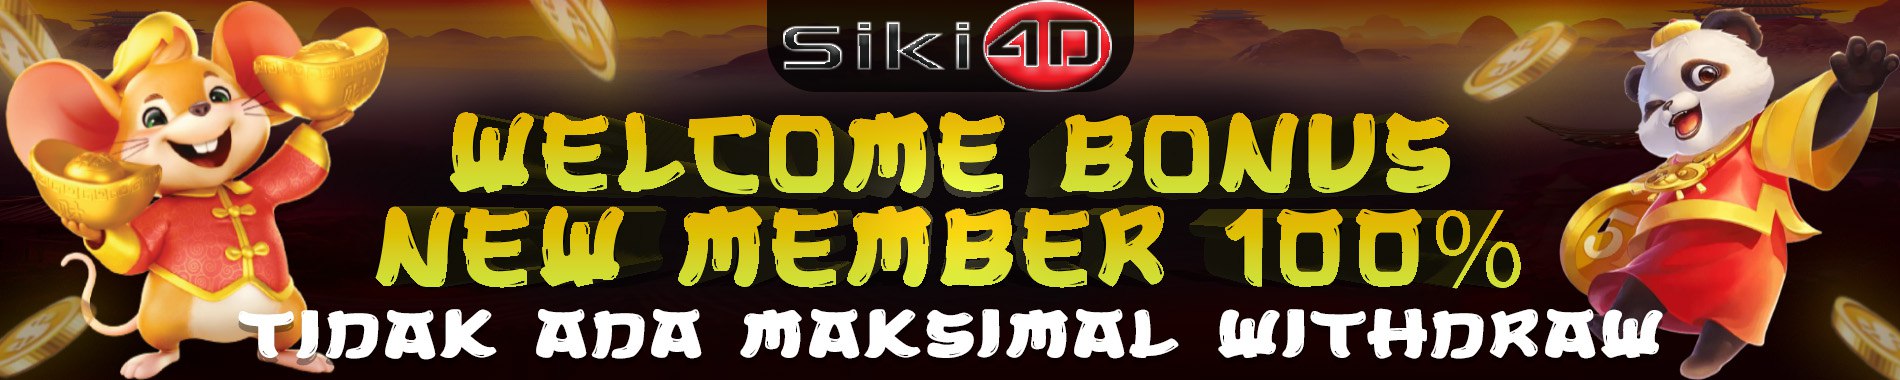 new member 100% siki4d mobile